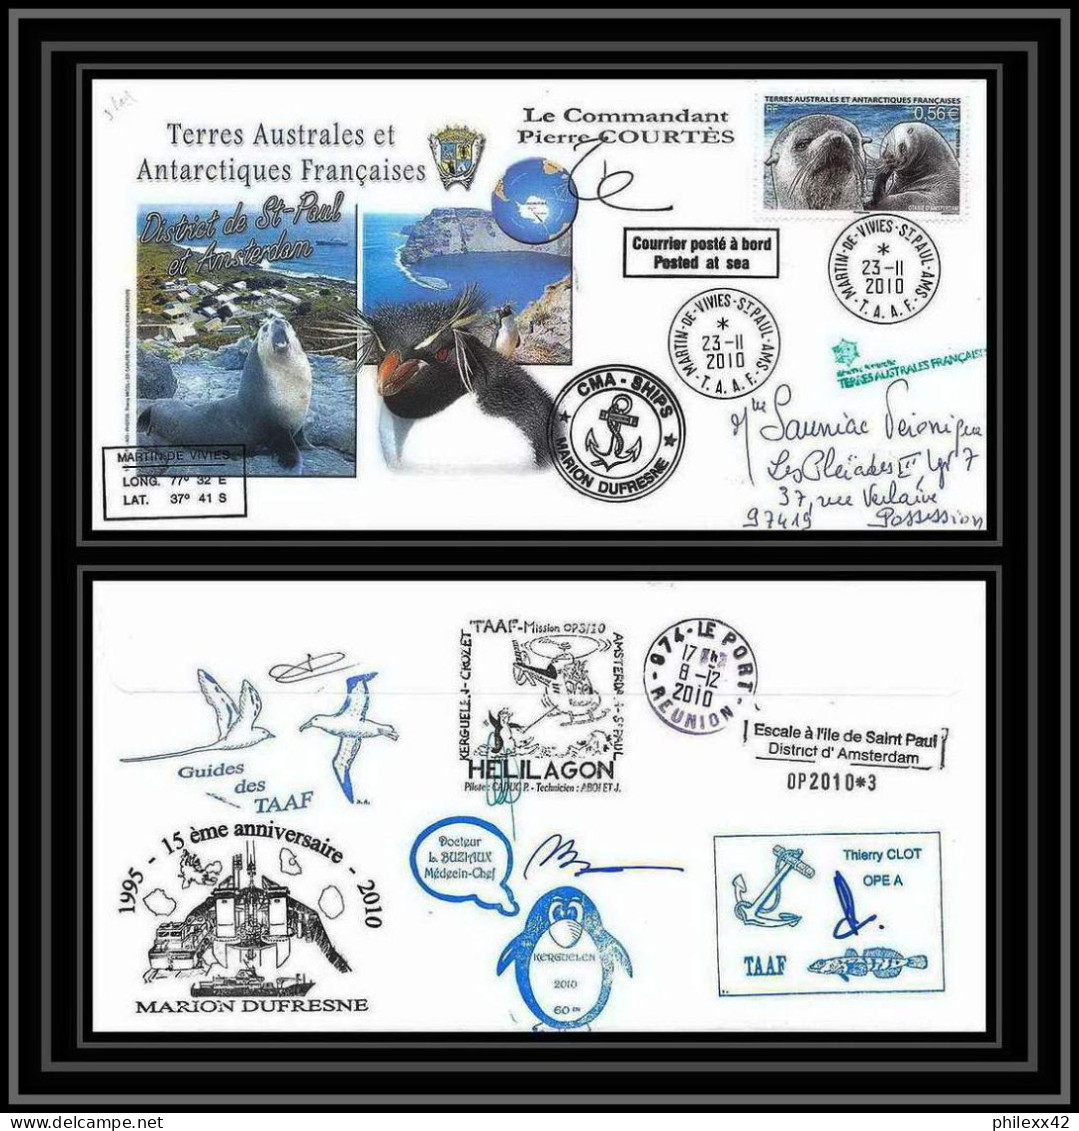 3044 Helilagon Dufresne Signé Signed Op 23/11/2010 /3 St Paul N°569 Otarie Seal Terres Australes (taaf) Lettre Cover - Hubschrauber